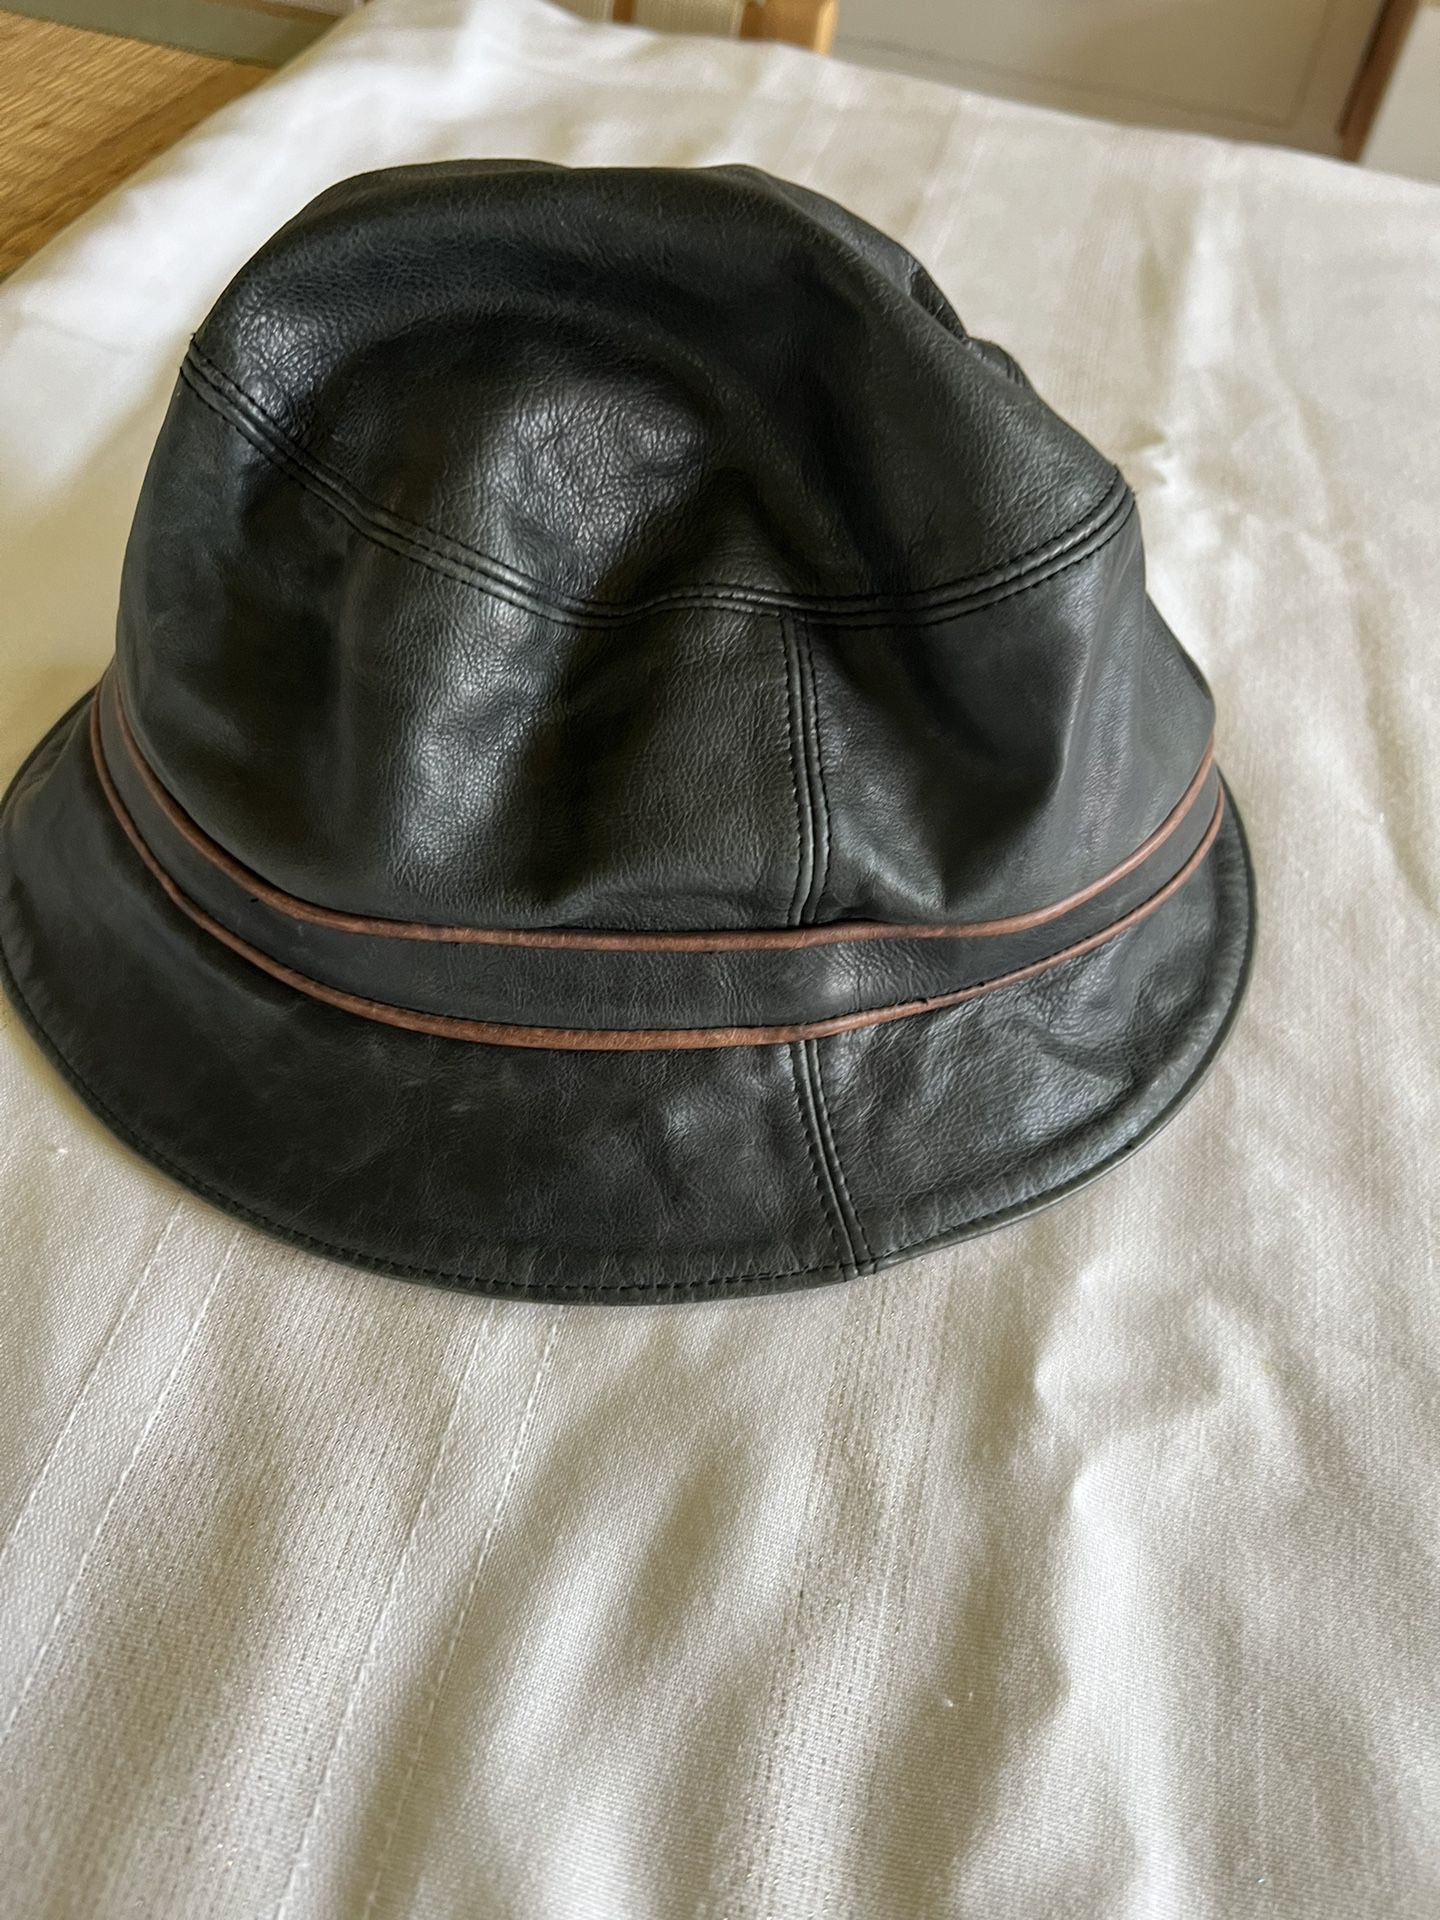 Coach Hat for women's 